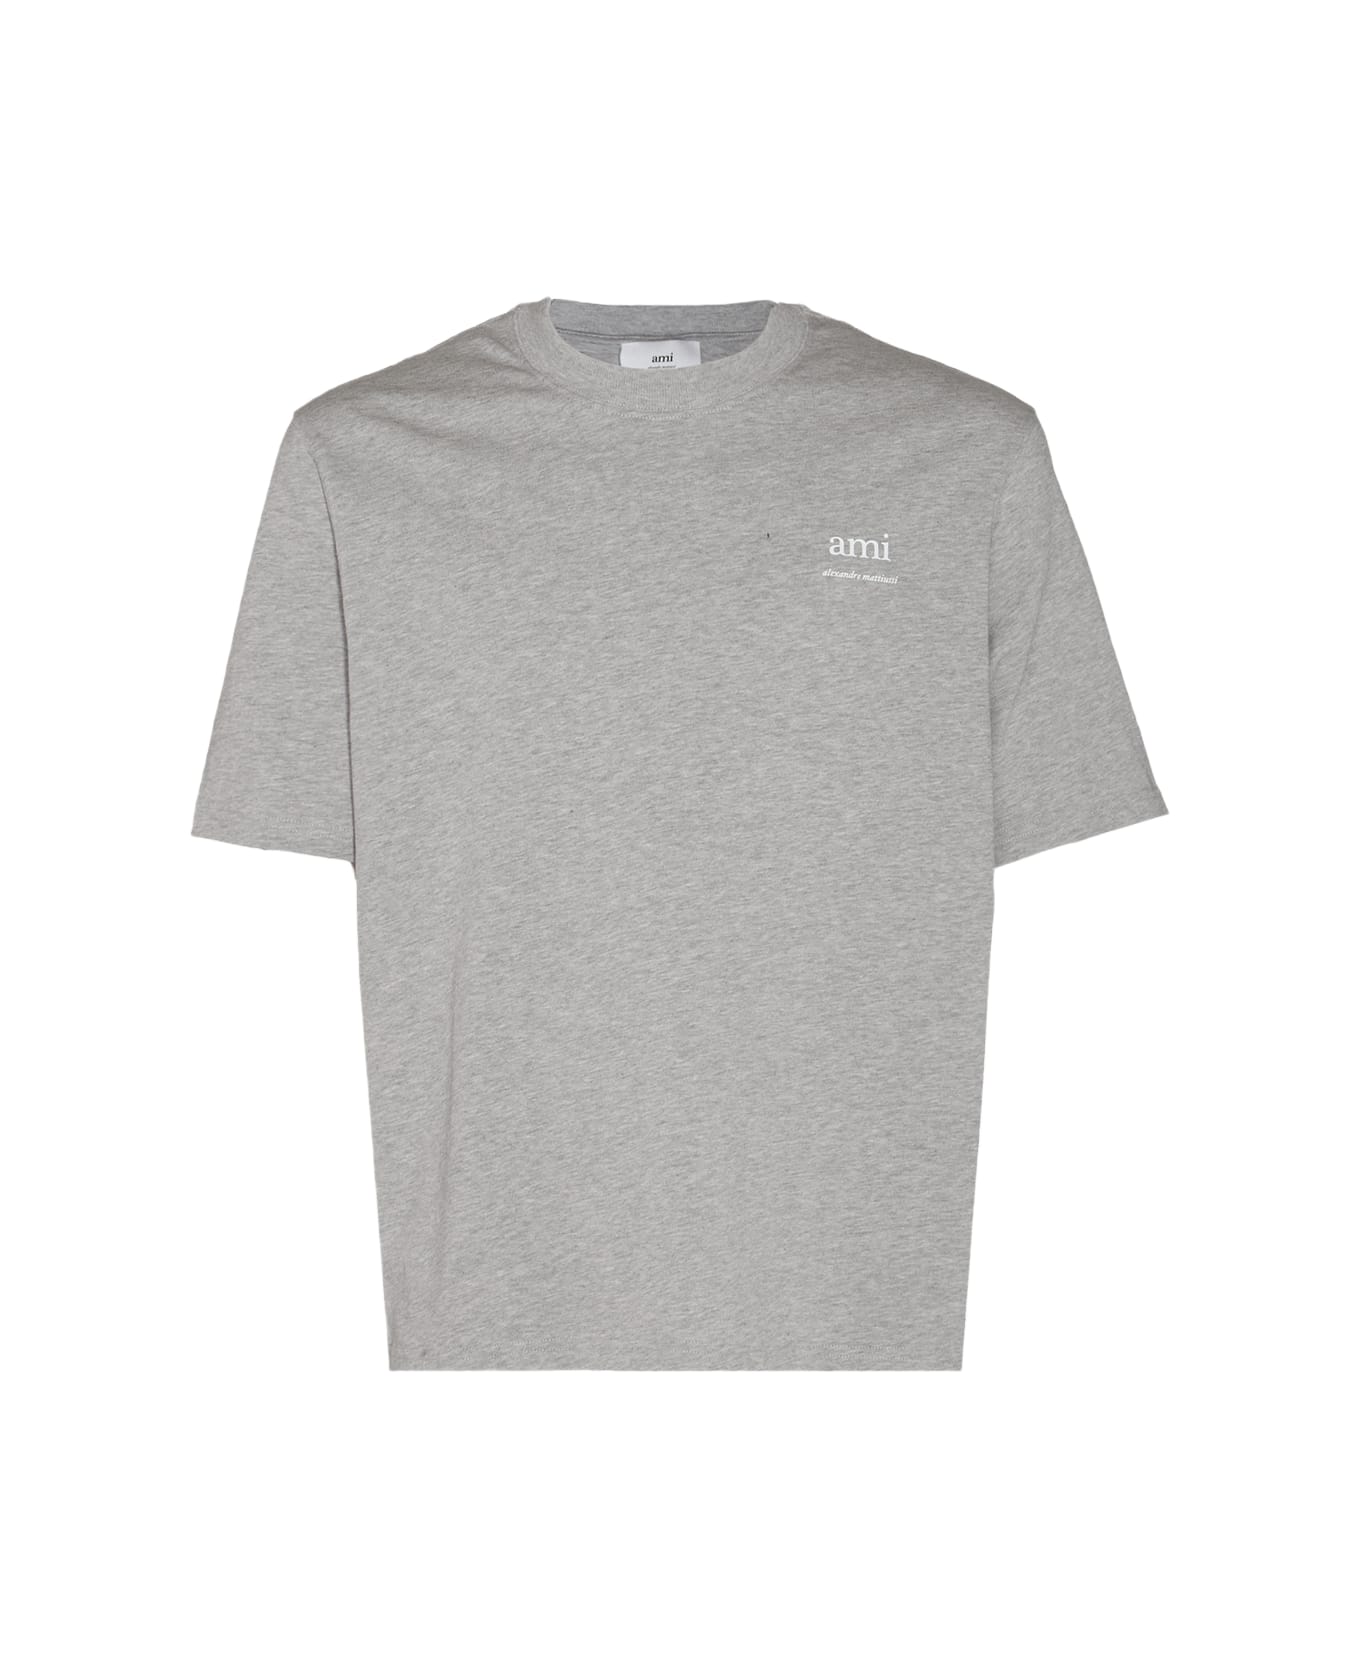 Ami Alexandre Mattiussi Grey Cotton T-shirt - GREY